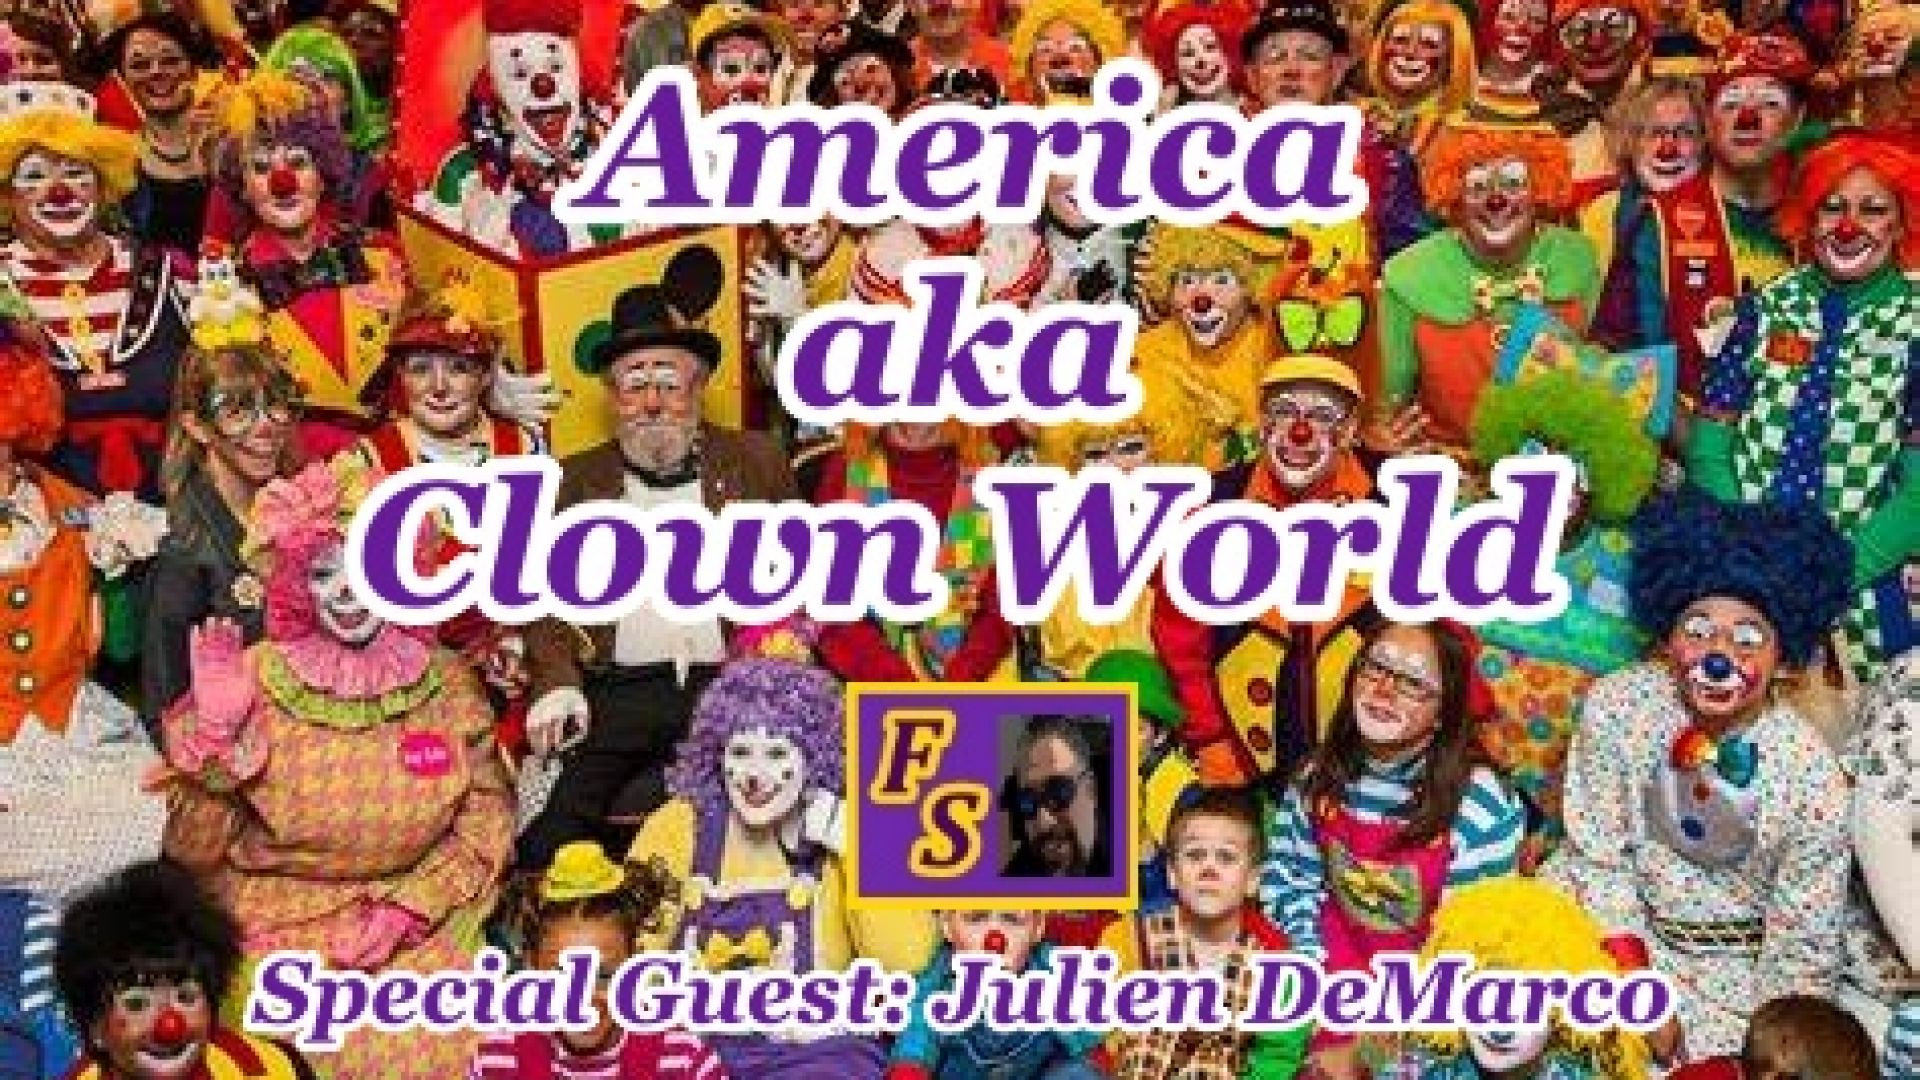 America: Clown World